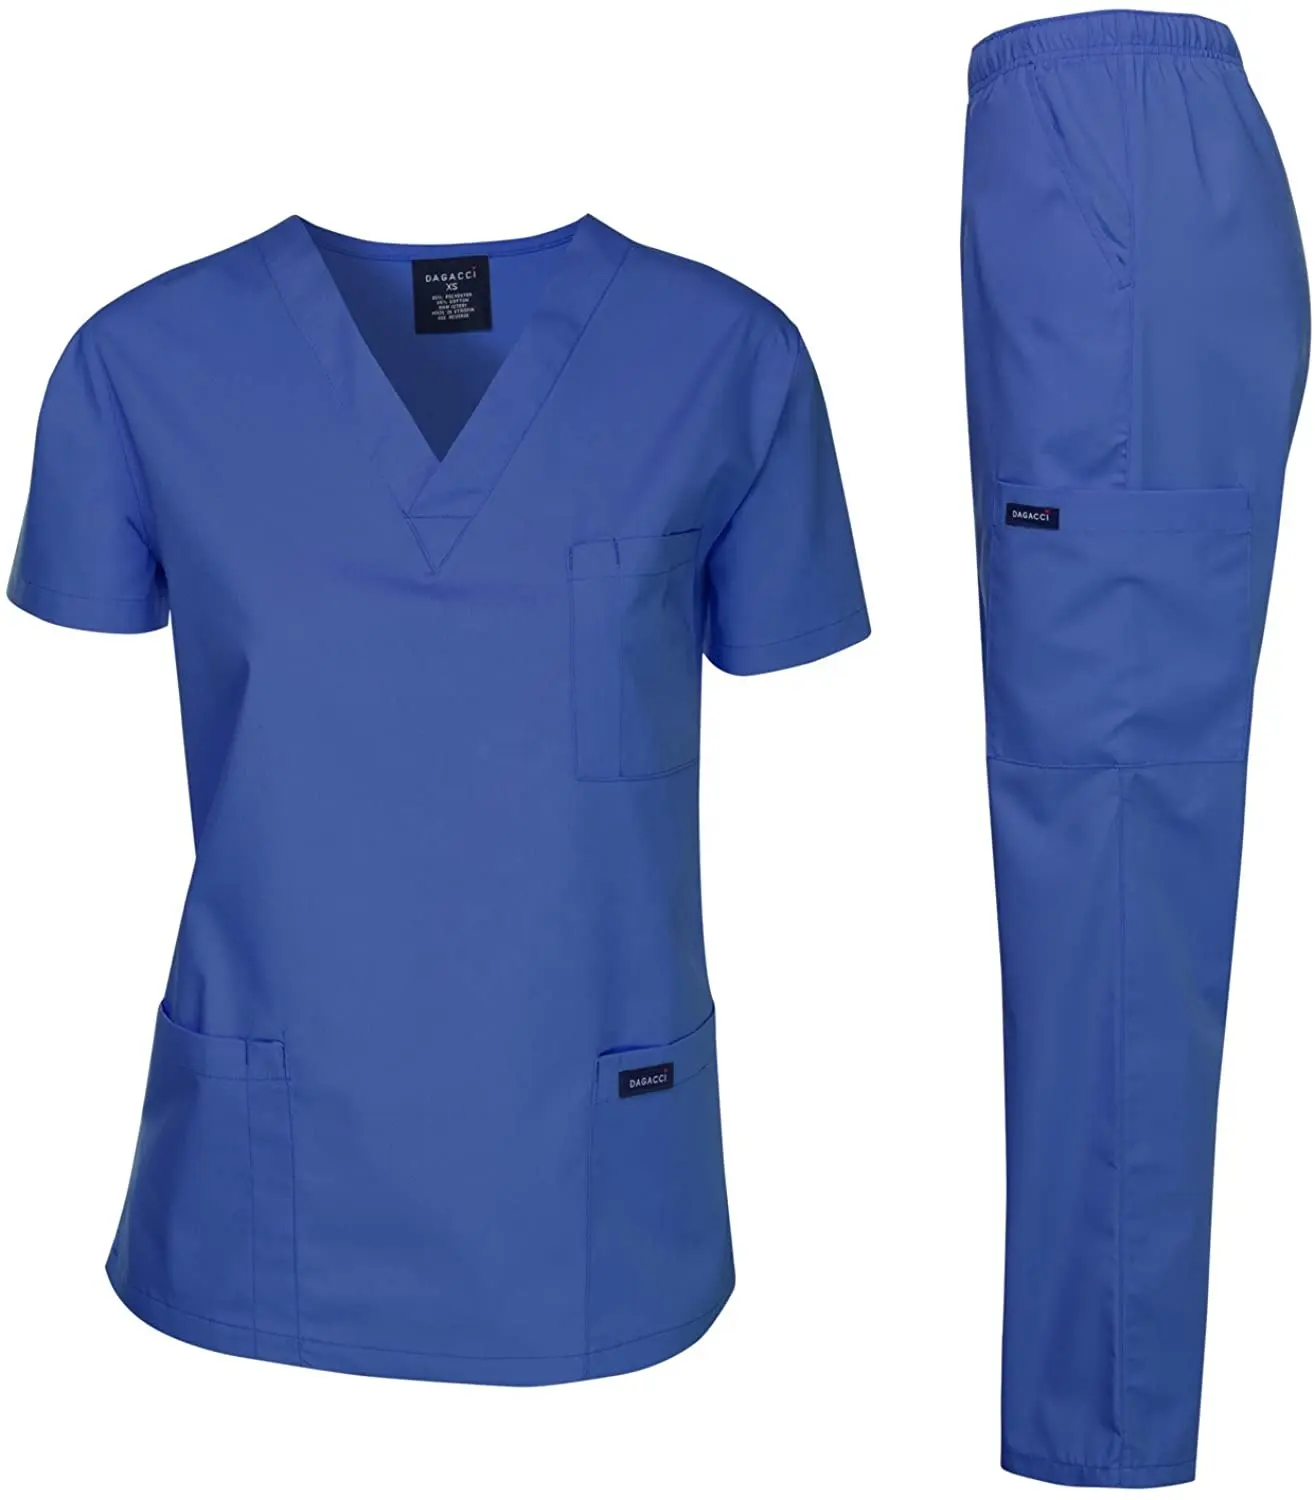 Vendita calda top + pantaloni vestito elegante infermieristica uomo donna jogger infermiera scrub medico uniformi set